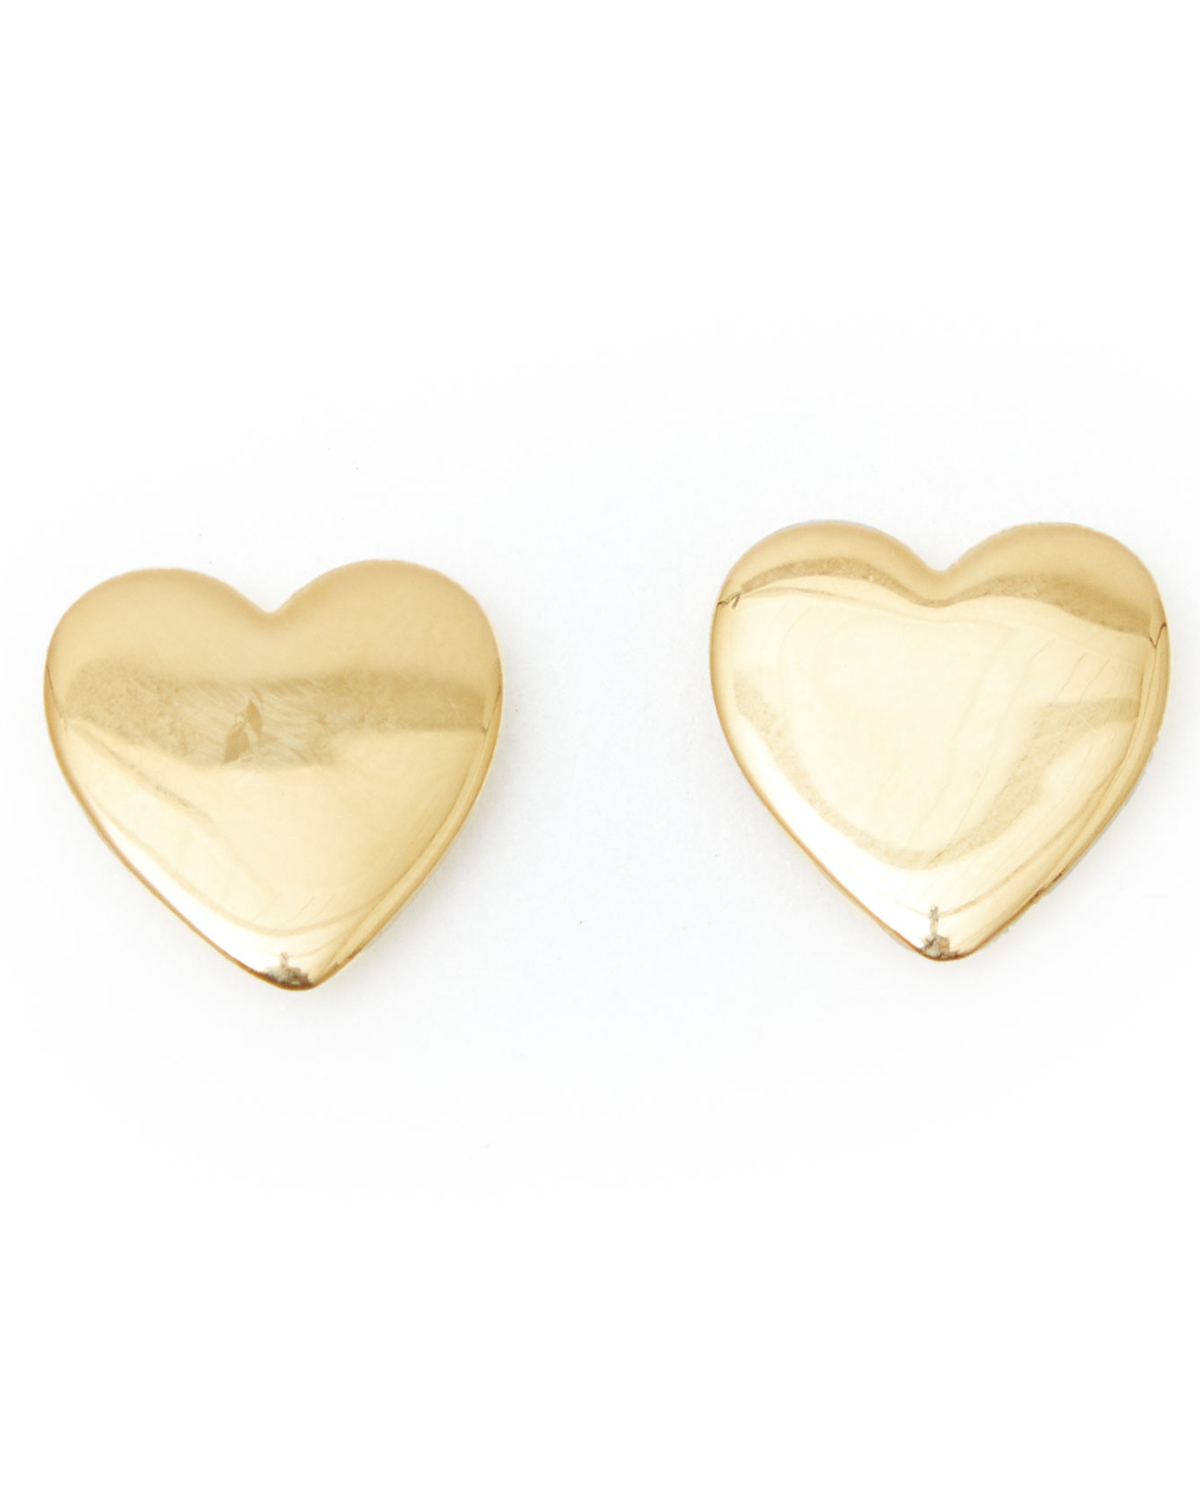 Heart Studs in 14K Gold Vermeil